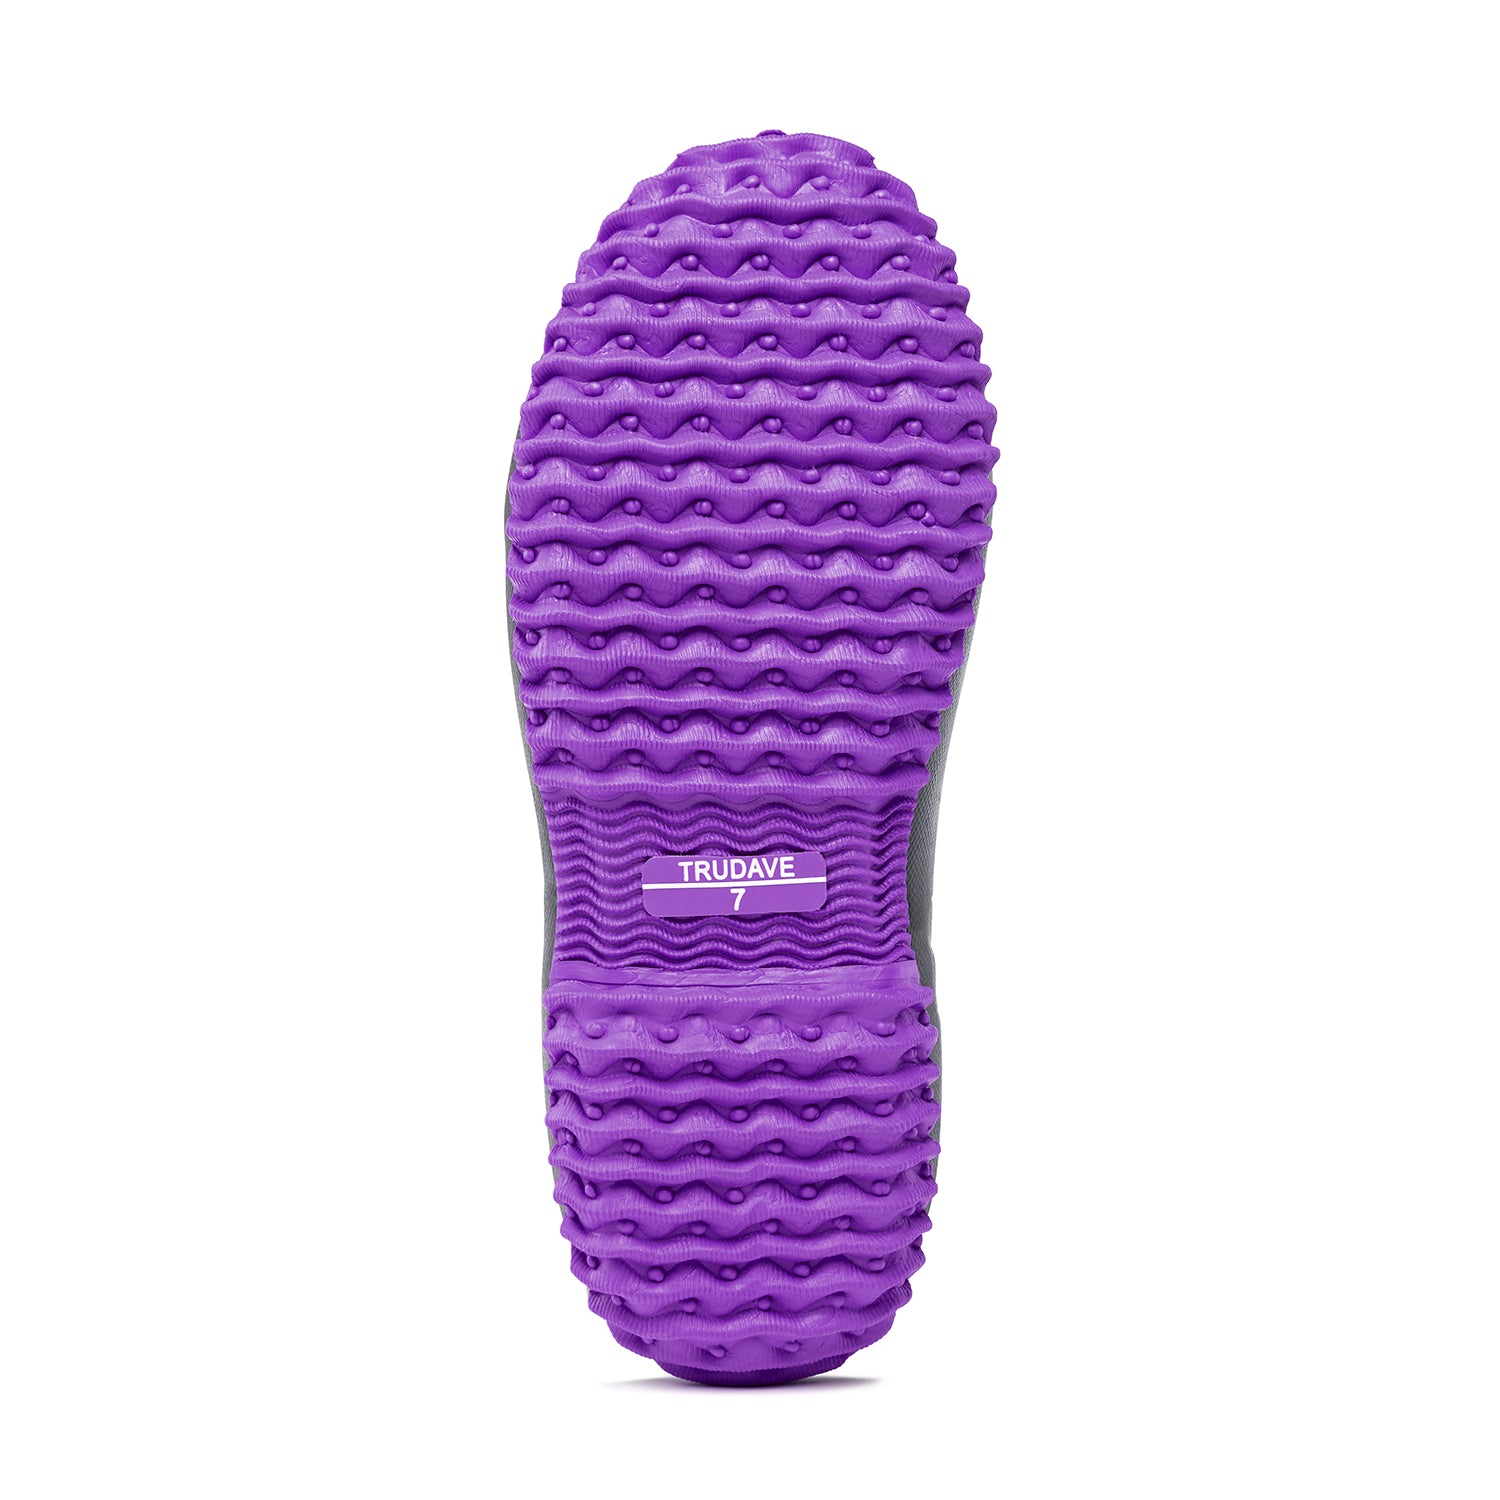 Trudave Women's Mud Boots for Gardening-Purple